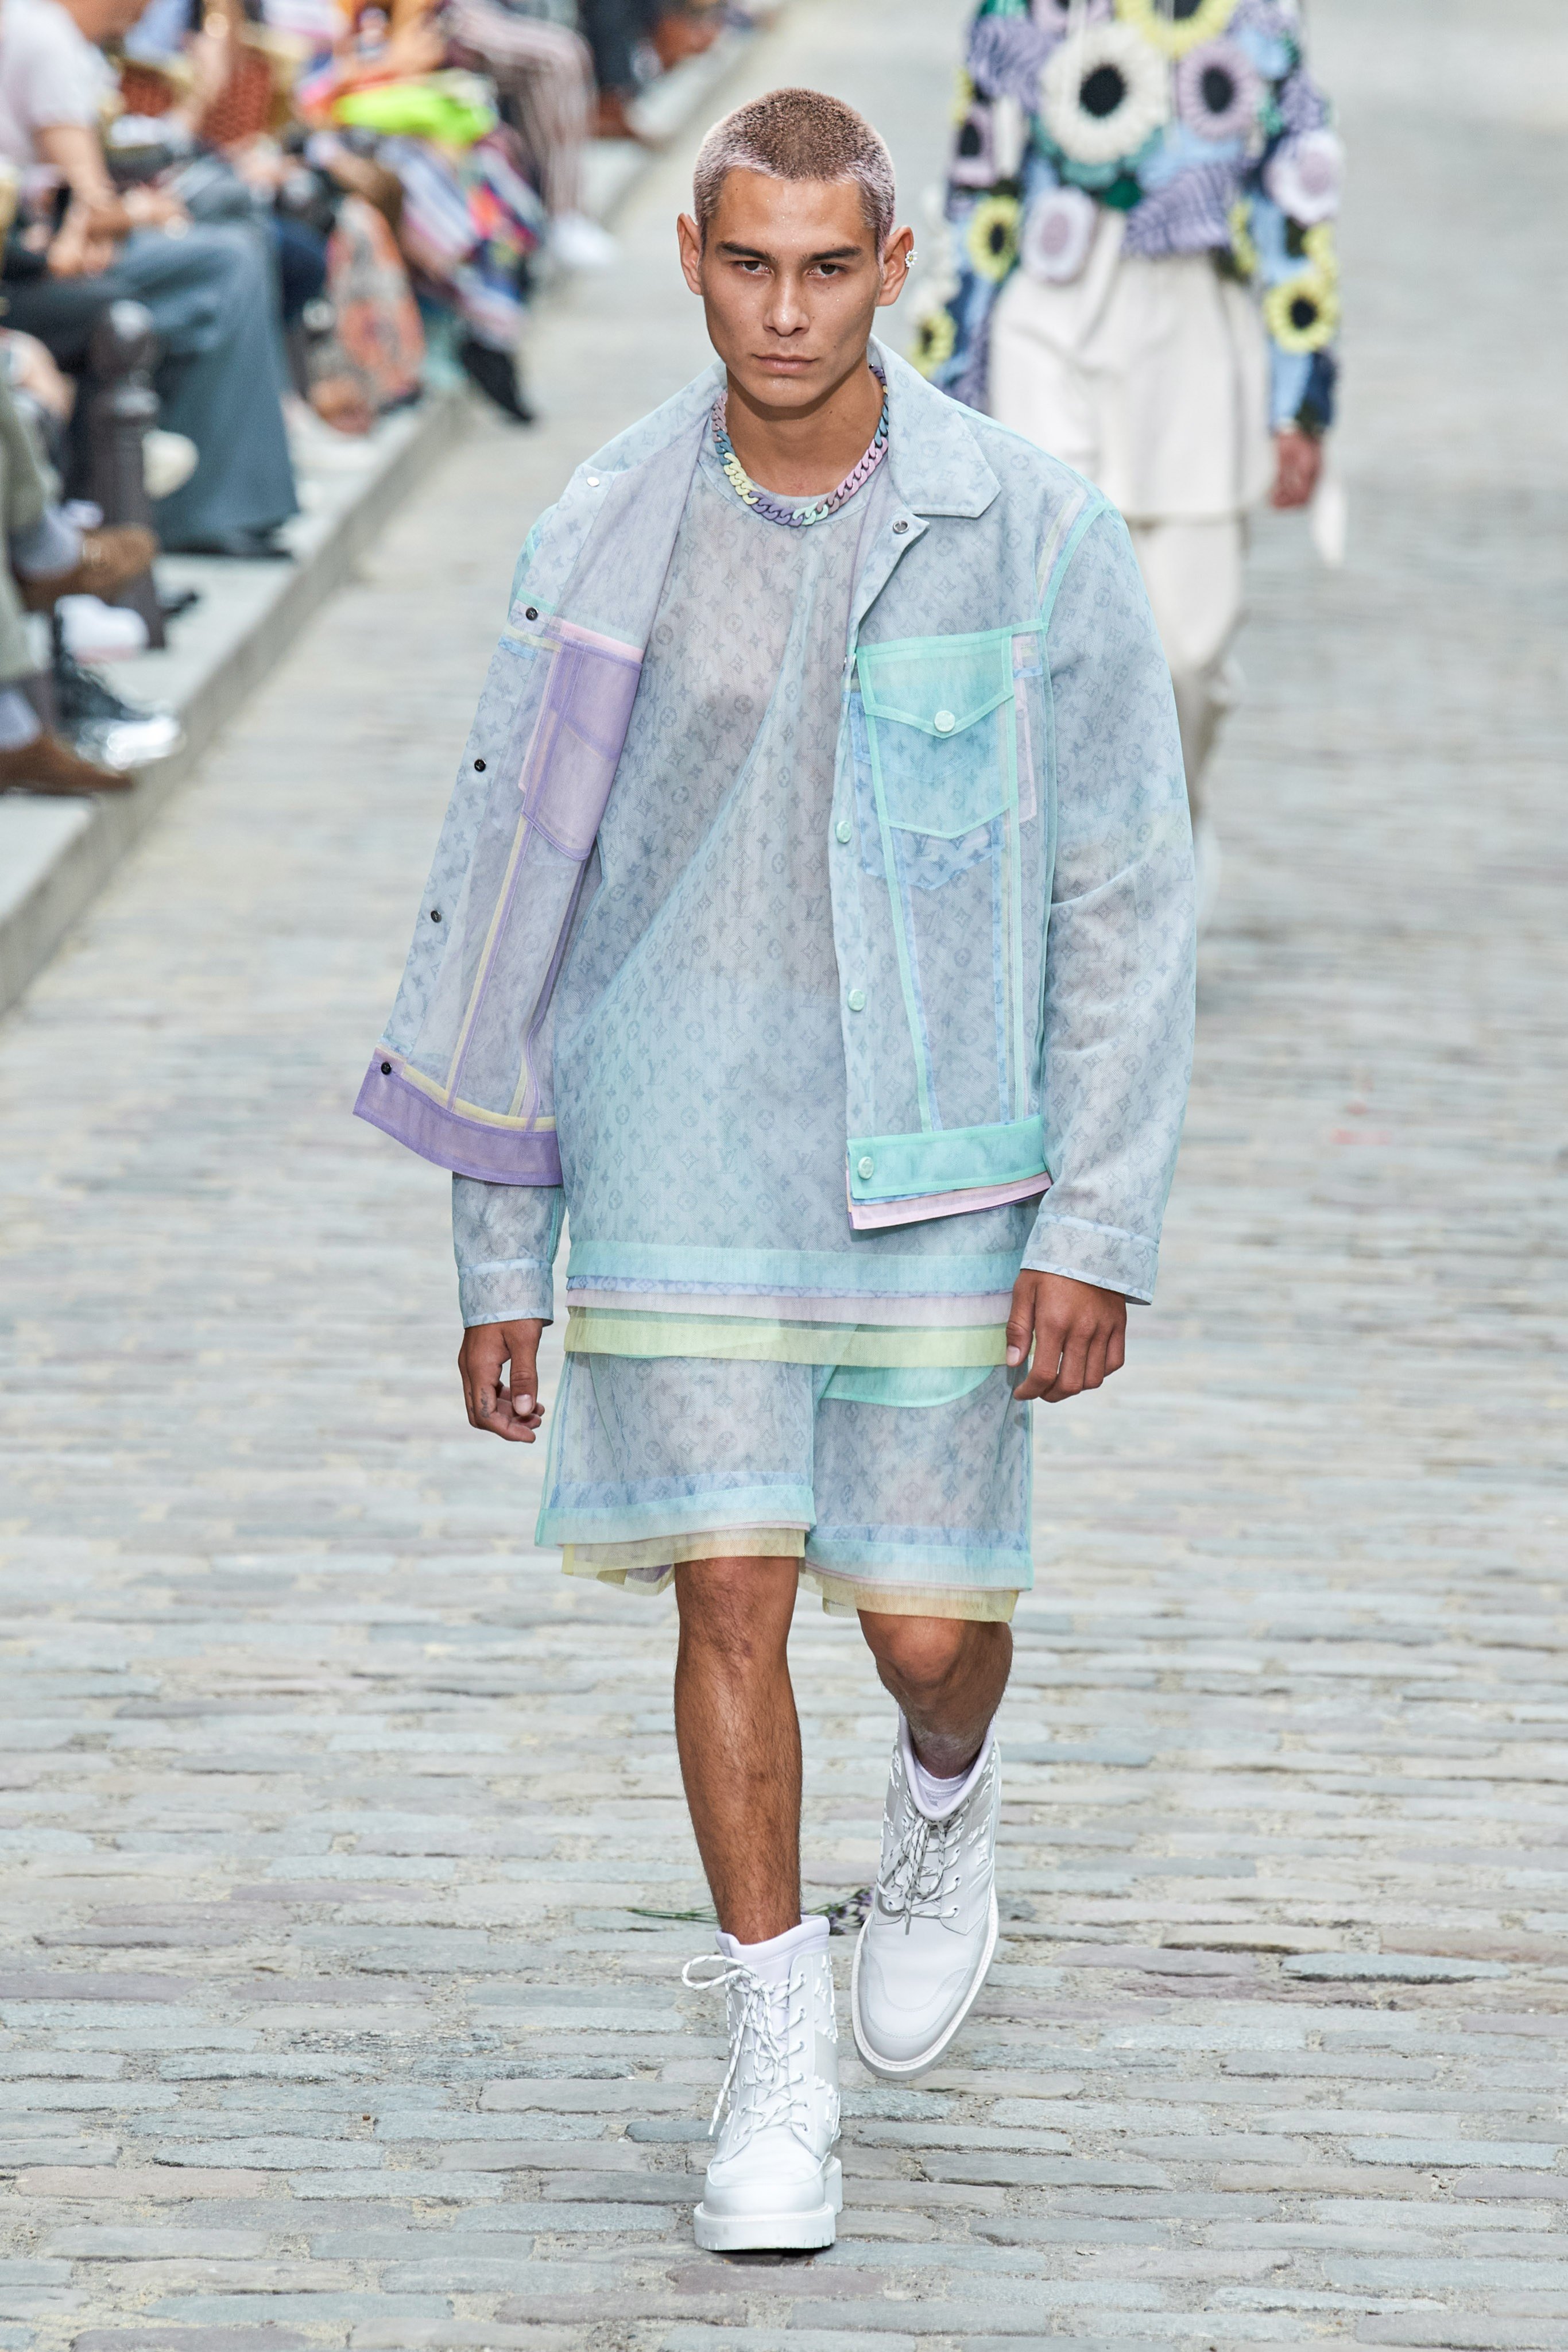 The Fashion Court on X: Pop Smoke wore a #LouisVuitton Spring